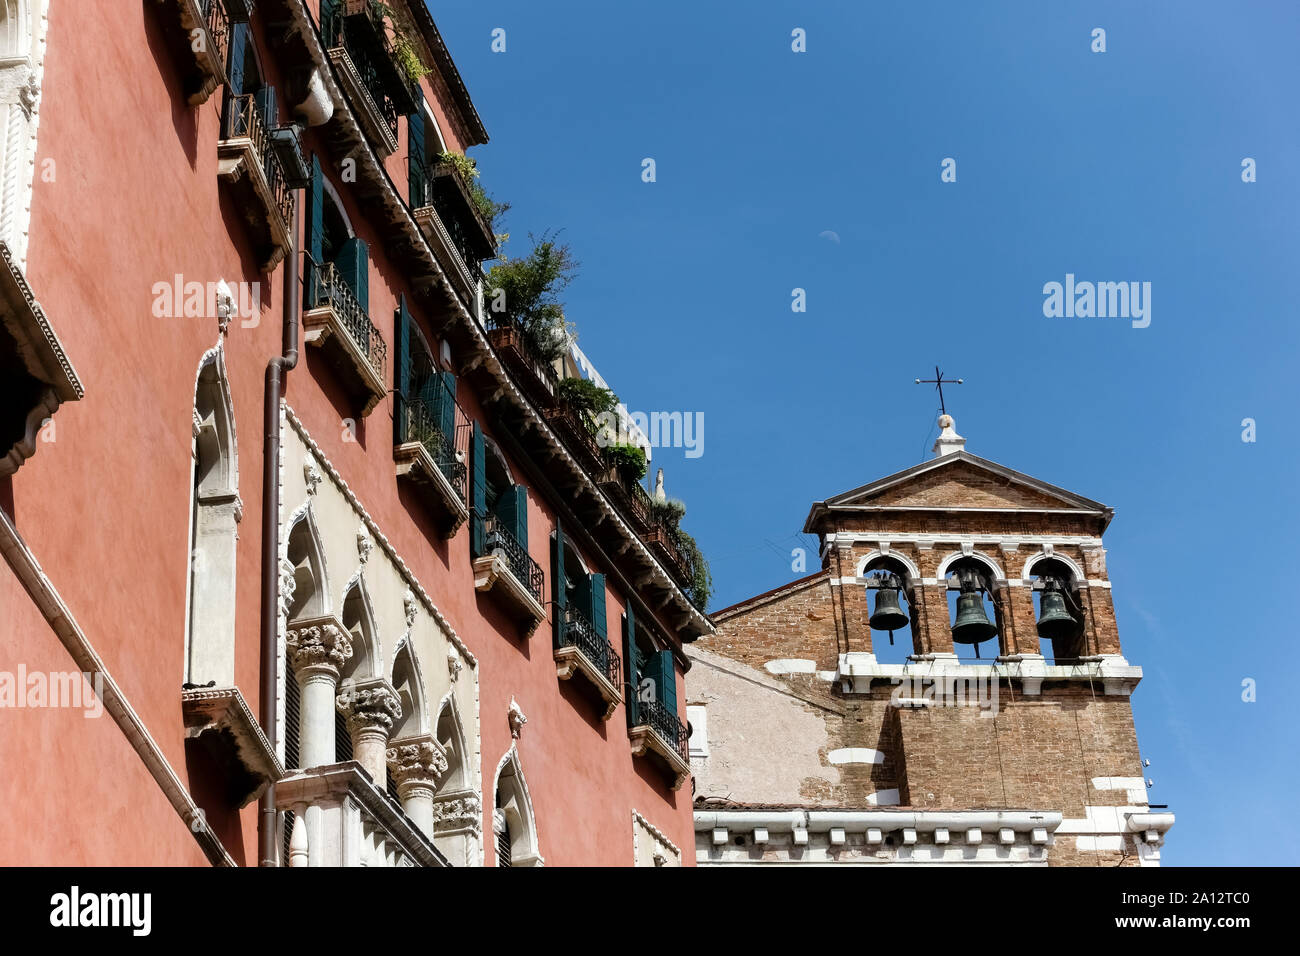 Glockenturm von Santa Maria del Giglio auch bekannt als Santa Maria Zobenigo. Kirche Von Venedig. Italien, Europa, EU. Stockfoto